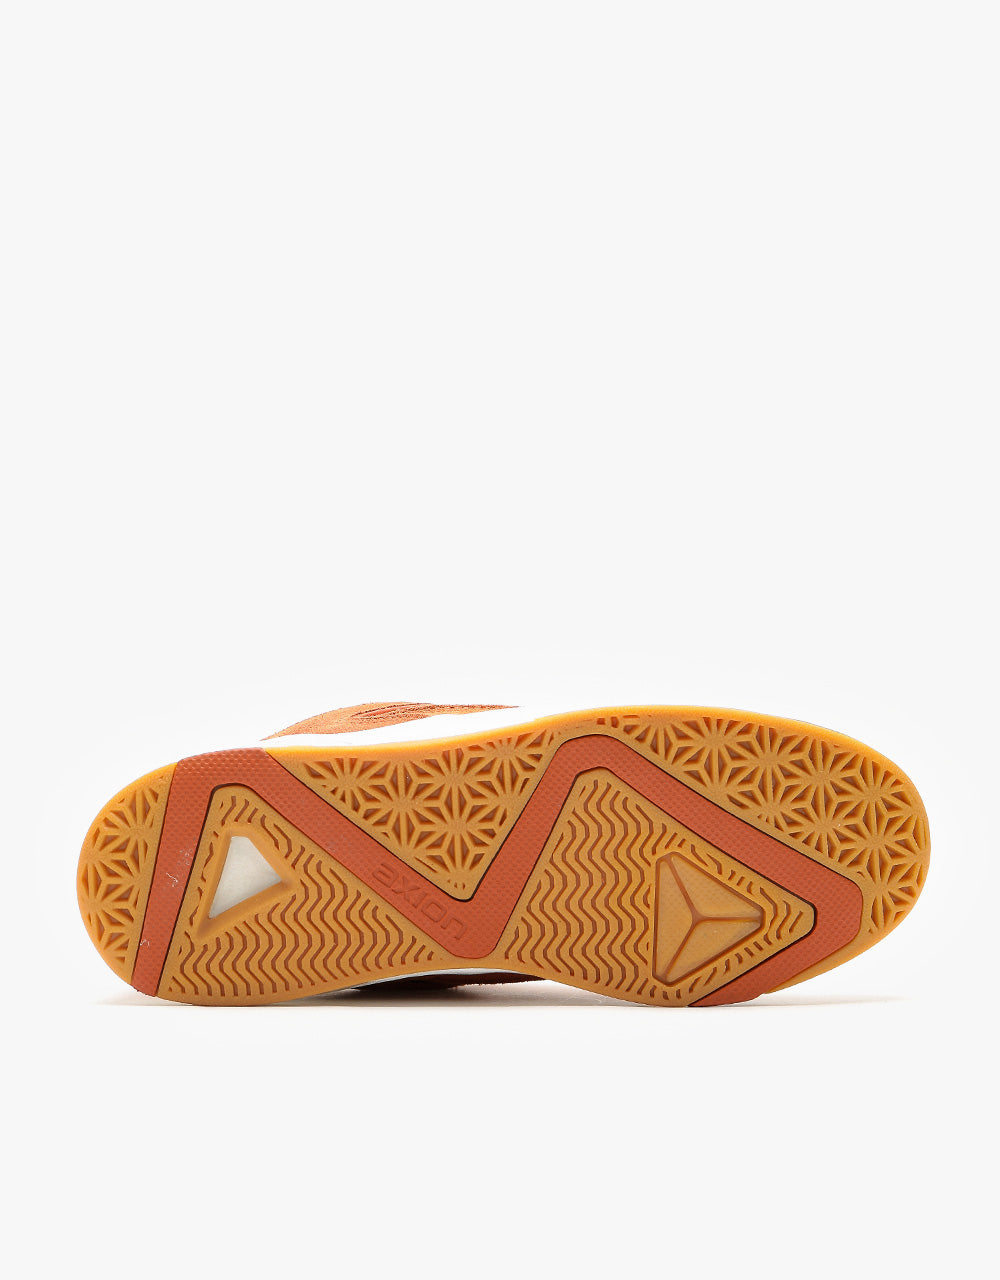 Axion Complex Skate Shoes - Caramel